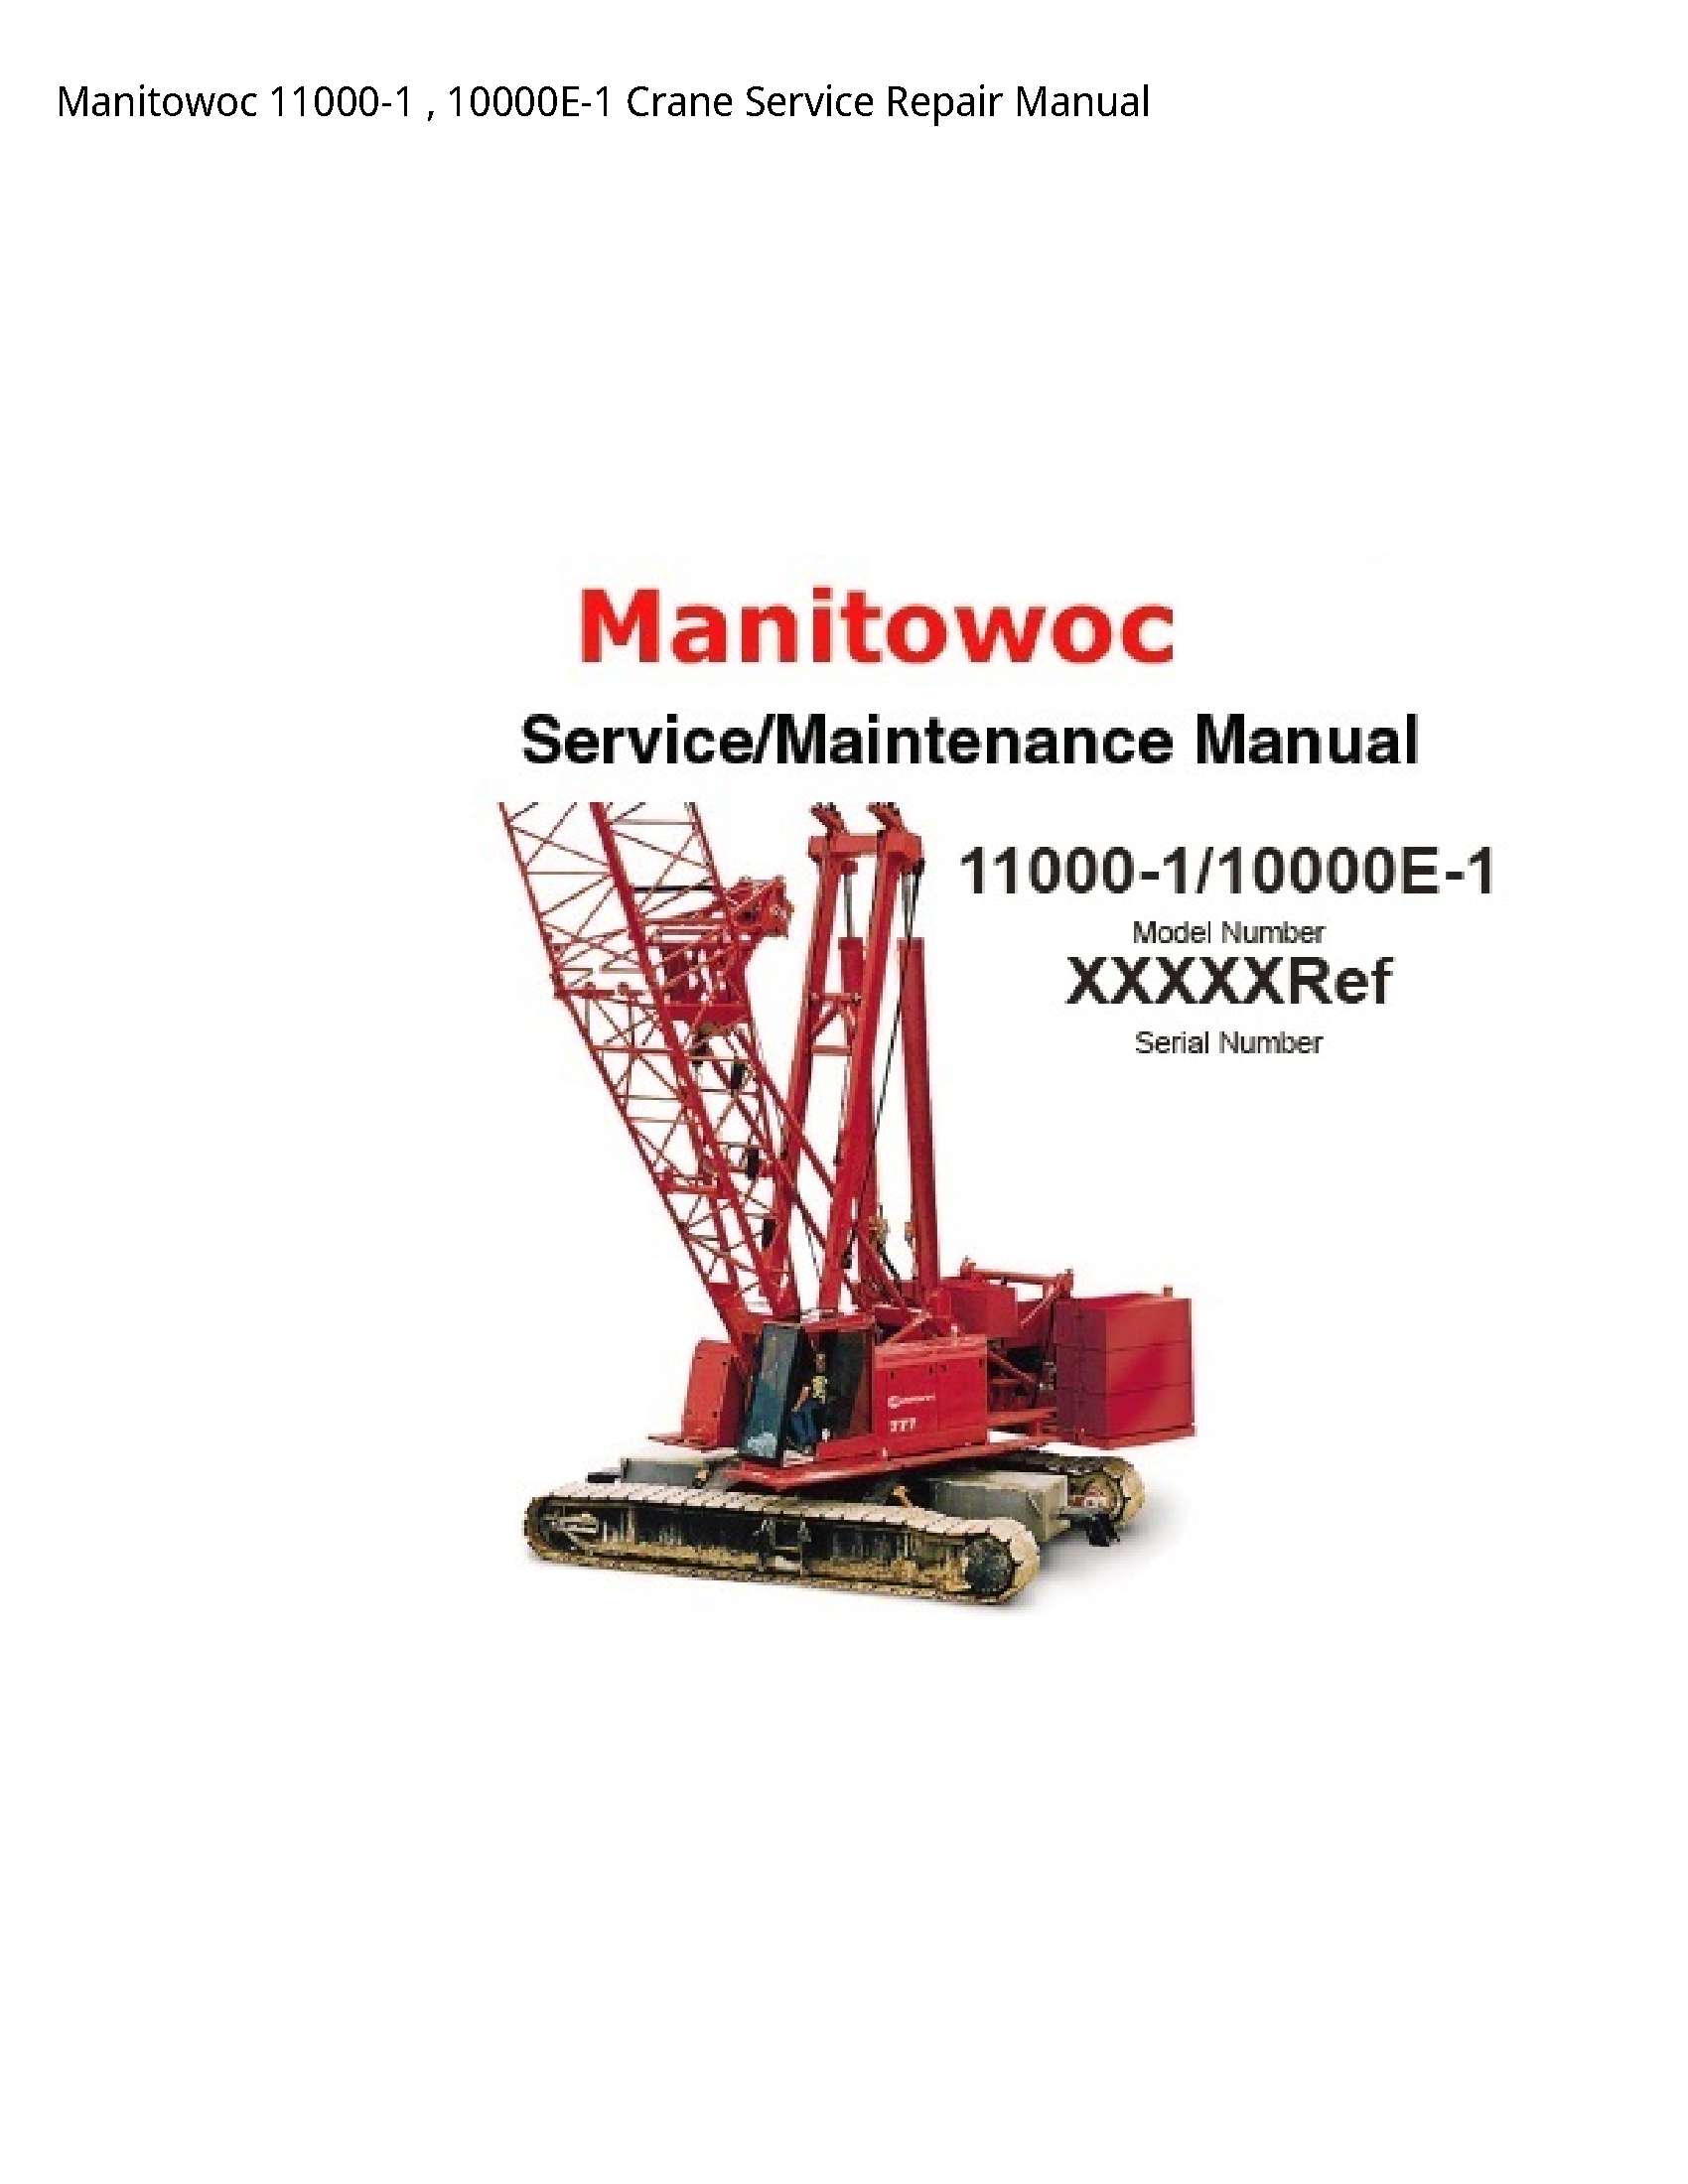 Manitowoc 11000-1 Crane manual